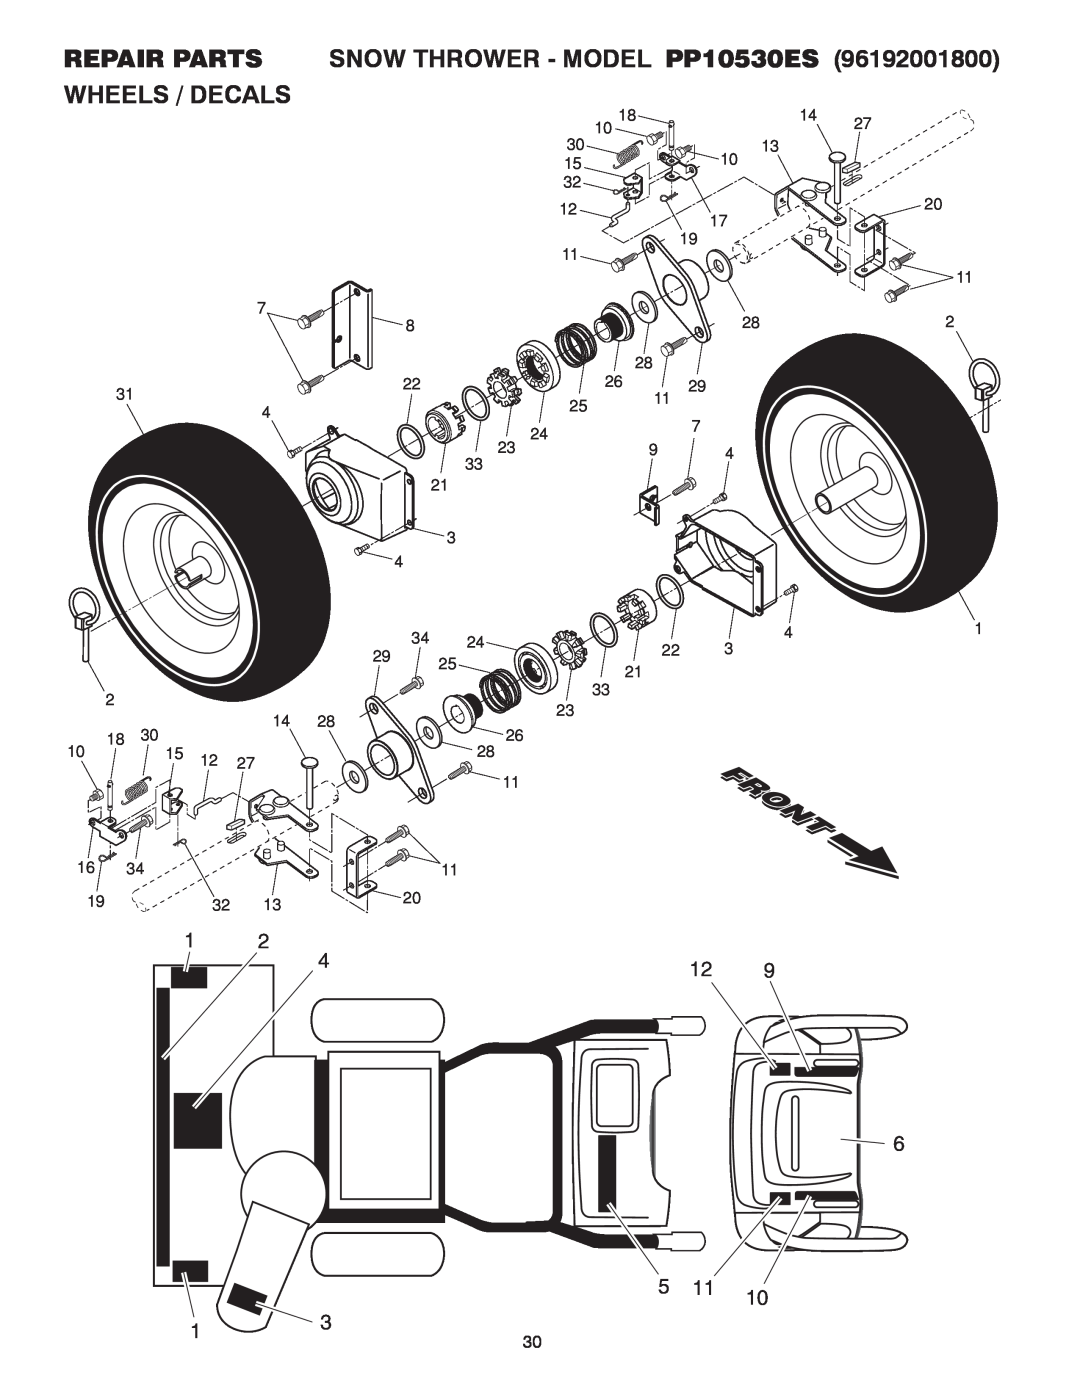 Poulan 96192001800 owner manual SNOW THROWER - MODEL PP10530ES, Repair Parts Wheels / Decals 